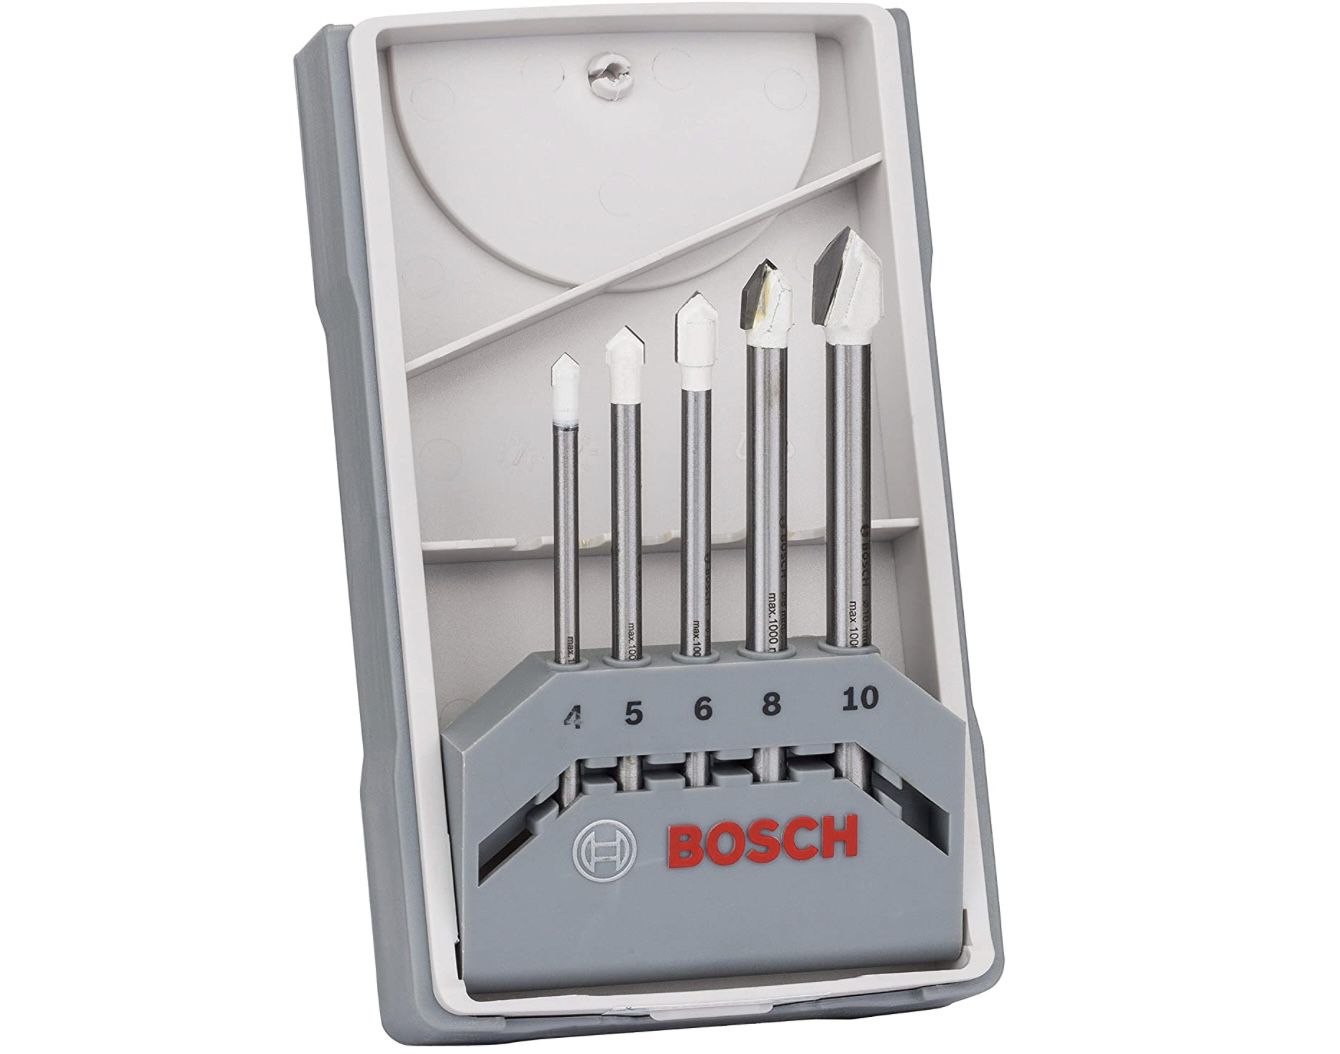 Bosch Professional 5tlg. Fliesenbohrer Set CYL 9 SoftCeramic für 15,42€ (statt 21€)